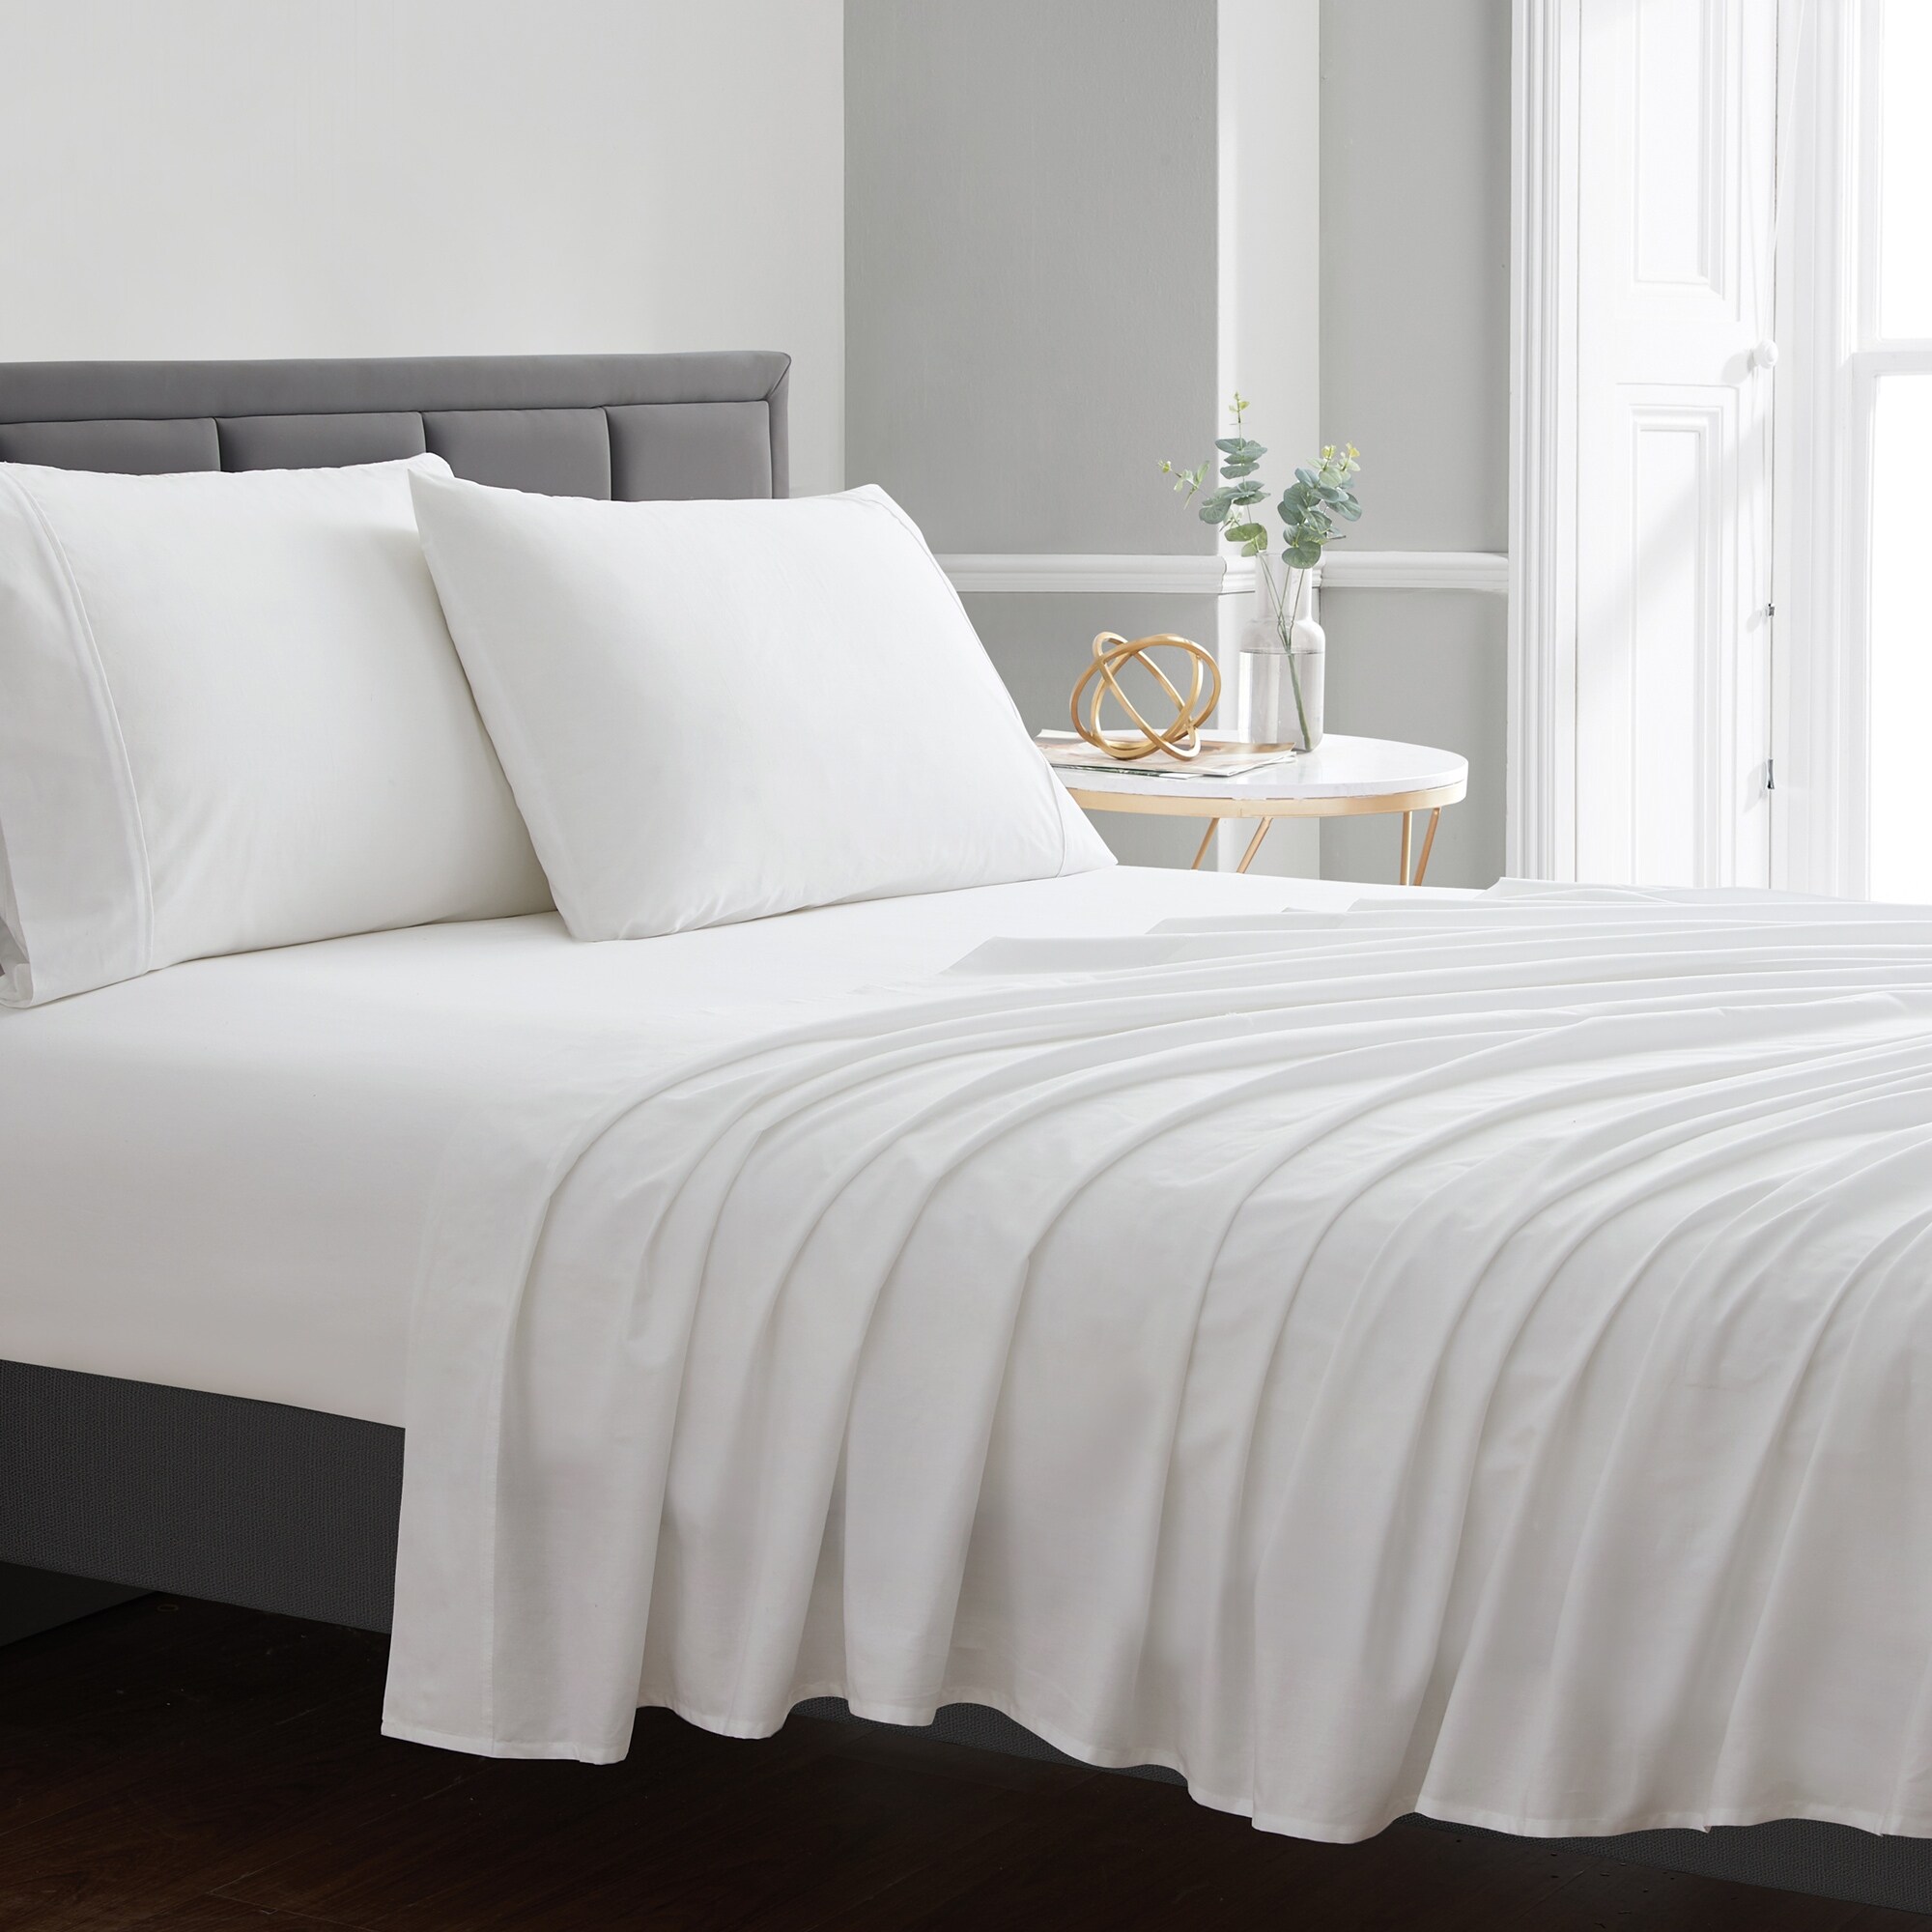 100% cotton Cot Bed Duvet Quilt Cover Set With Pillow Case 200 Thread Count 